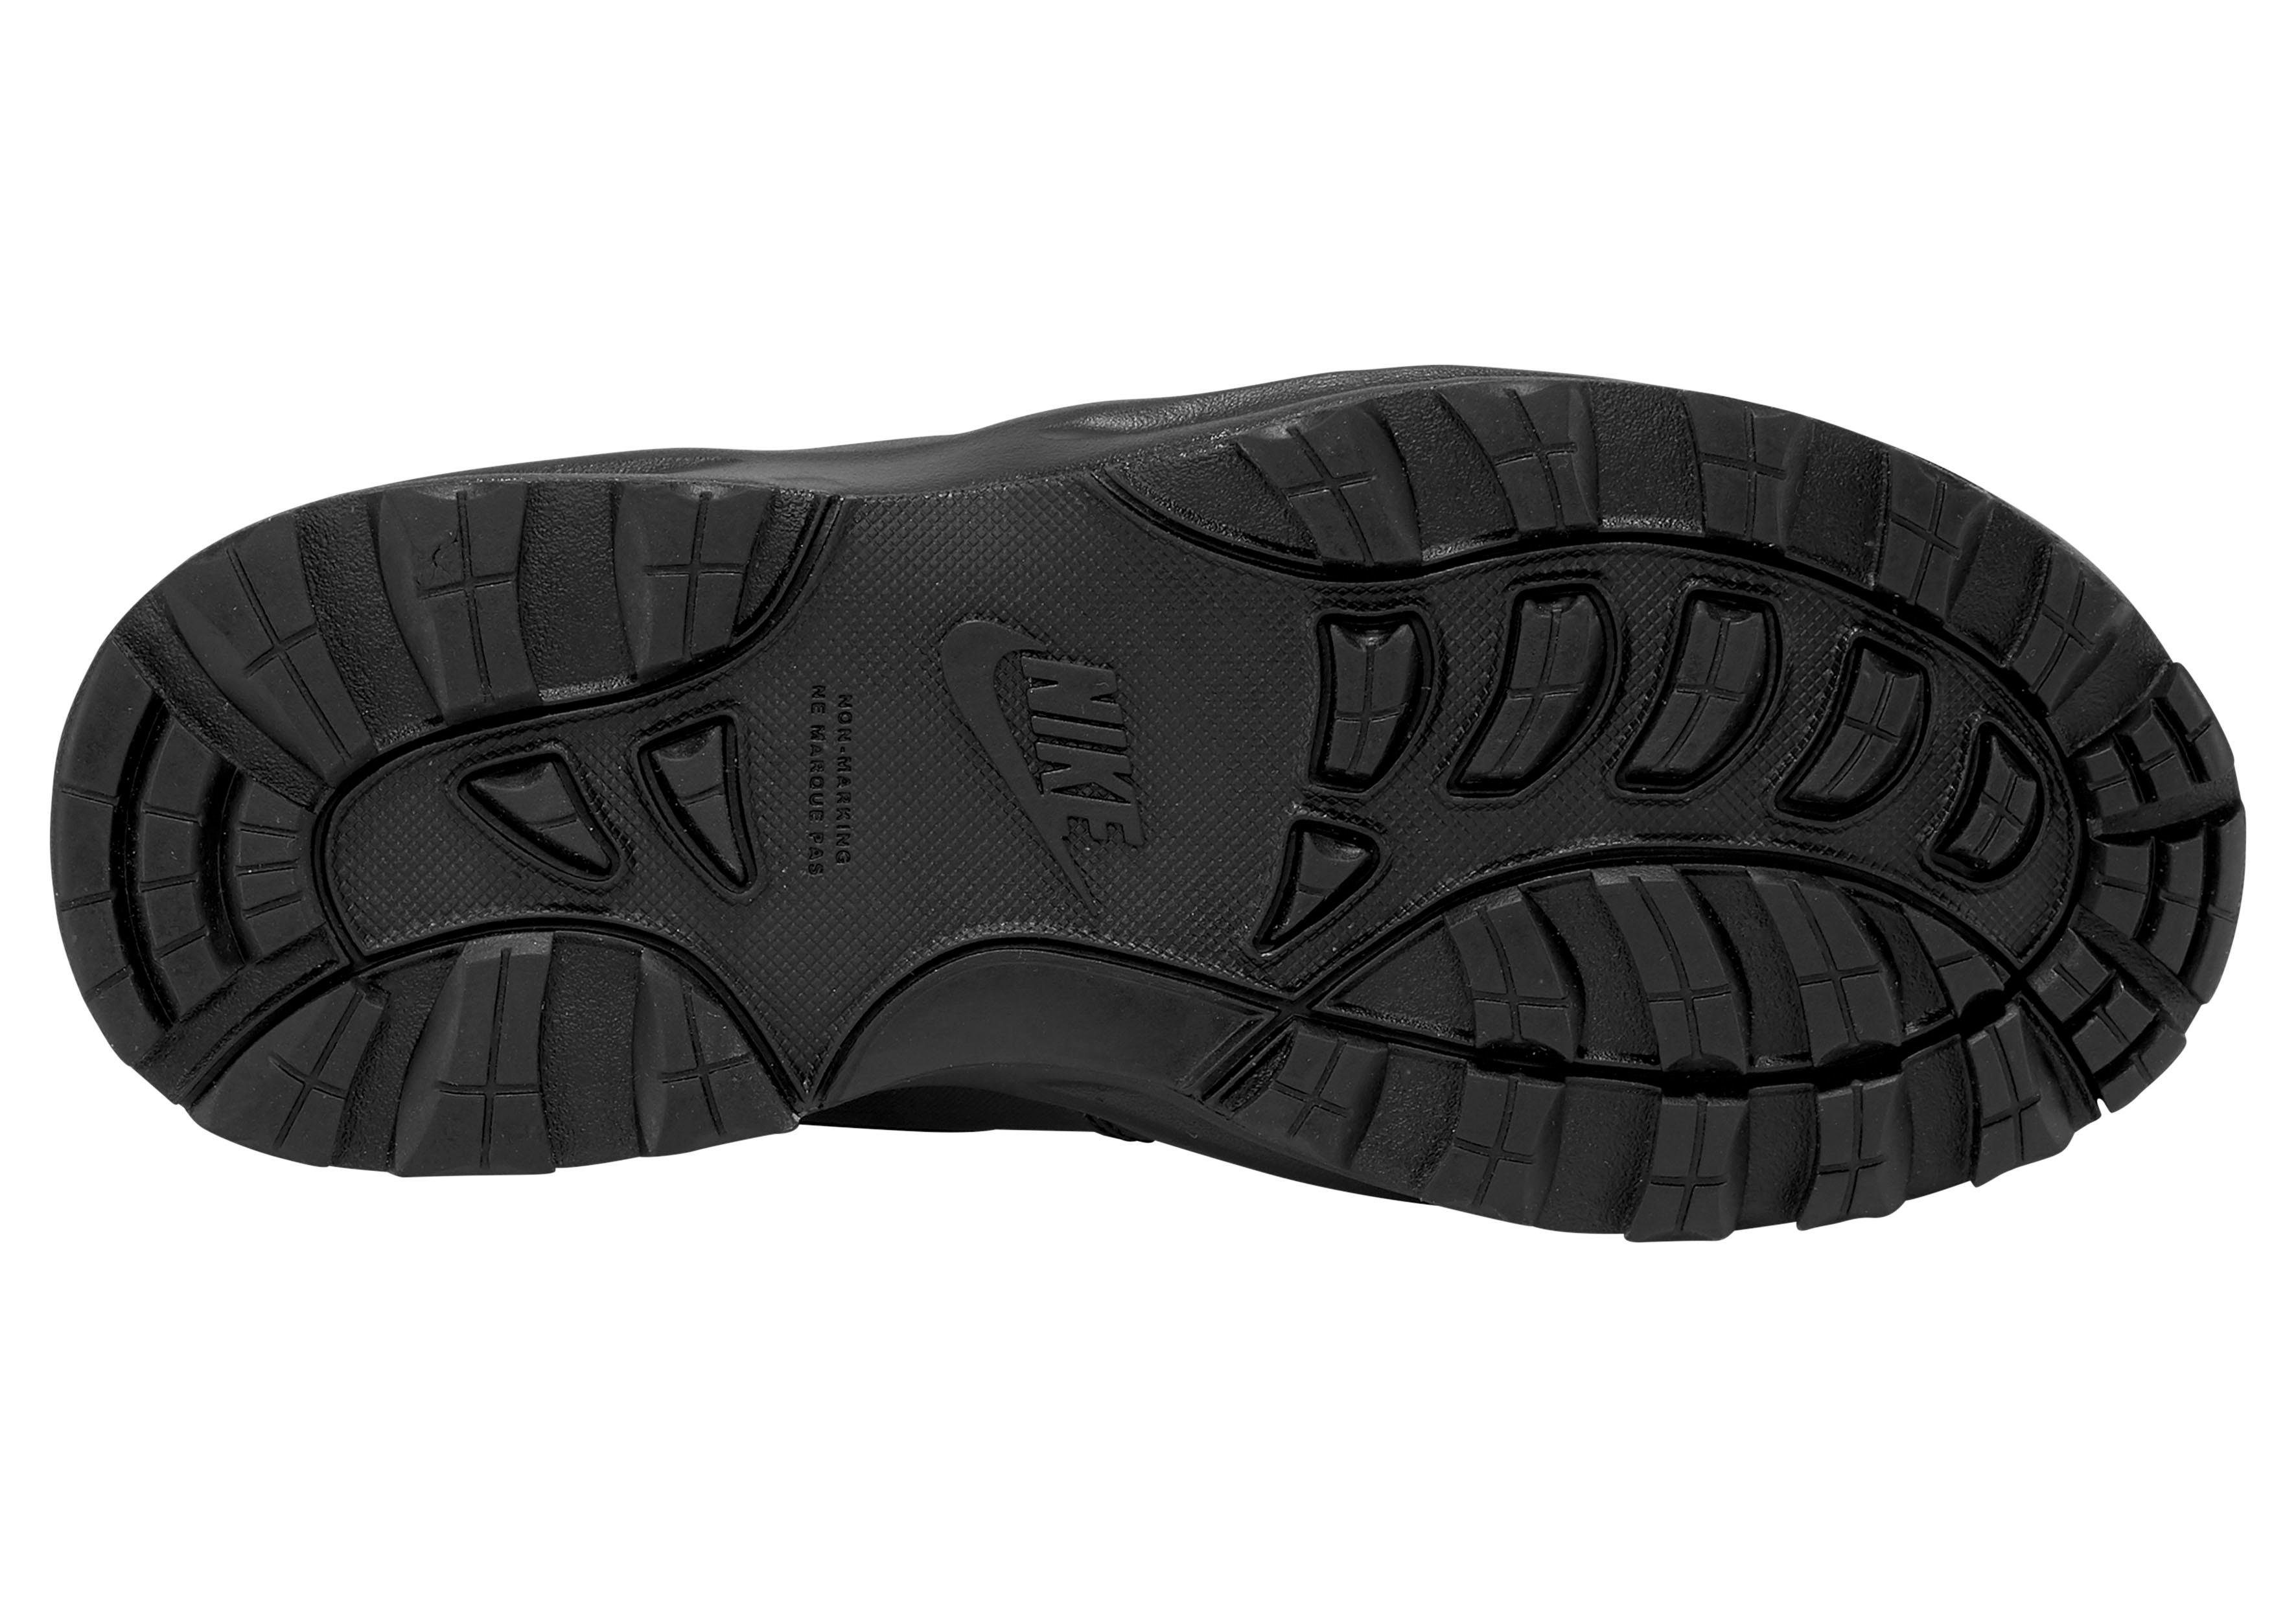 Nike Schnürboots schwarz Leather Sportswear Manoa